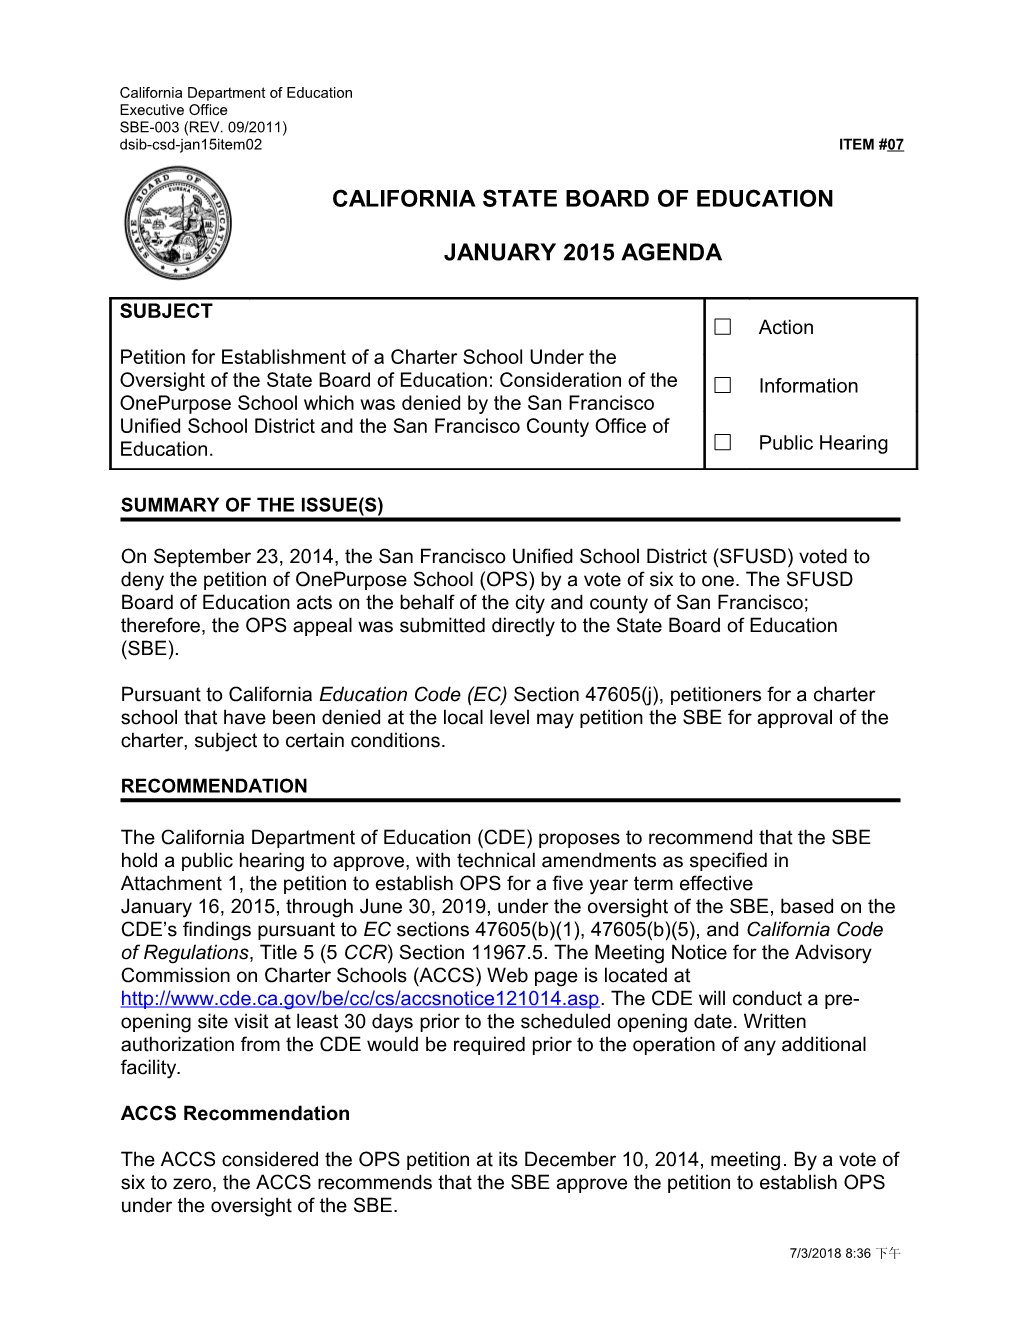 January 2015 Agenda Item 07 - Meeting Agendas (CA State Board of Education)